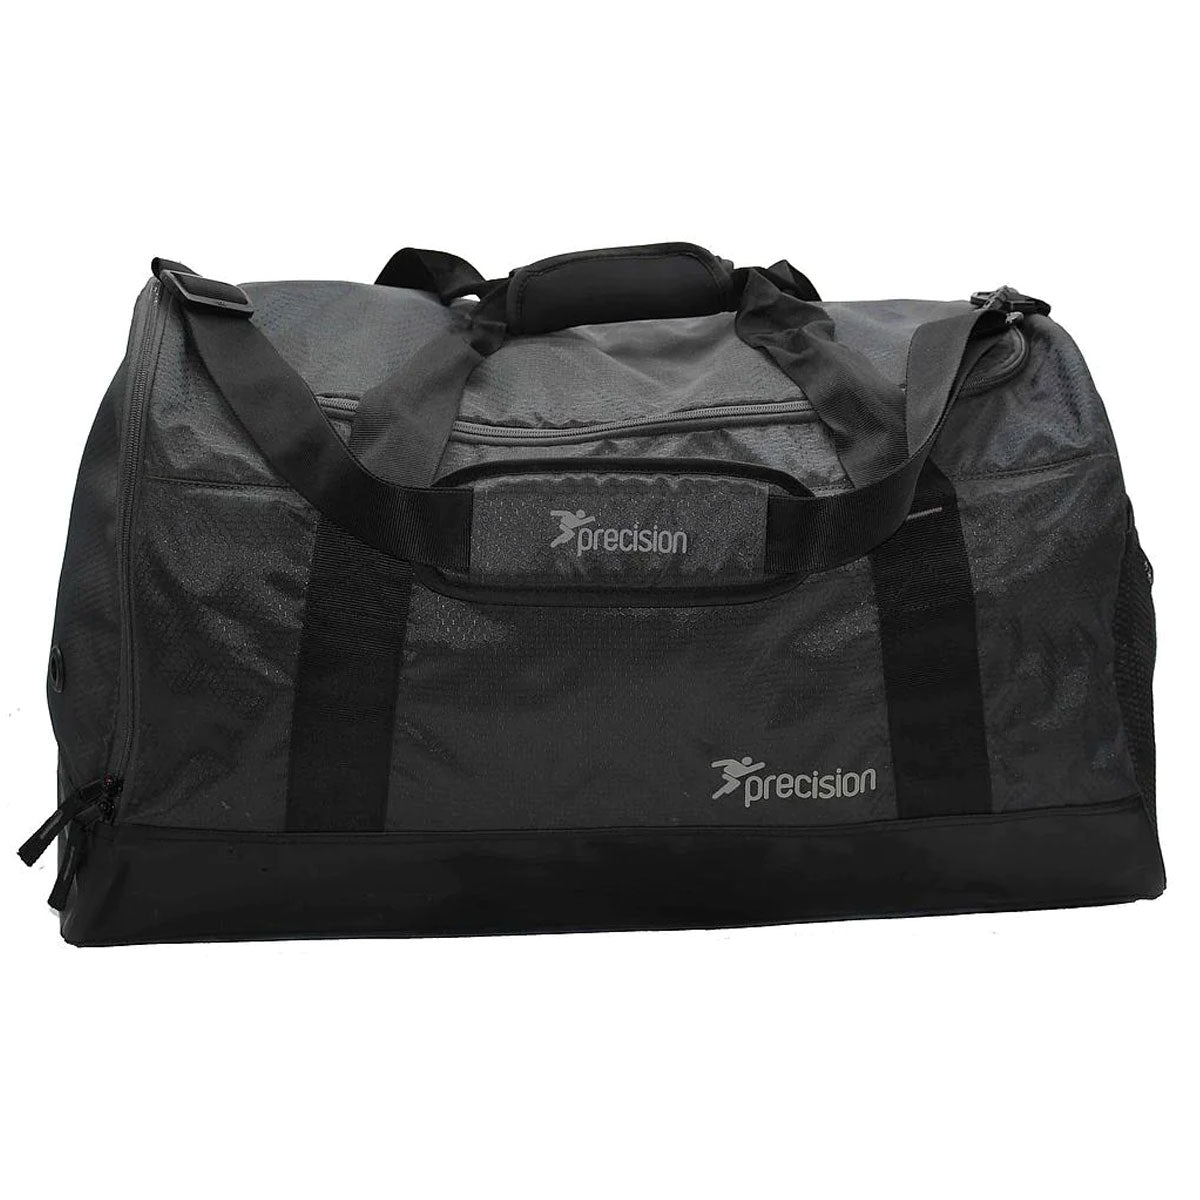 Precision Training Pro HX Team Holdall Bag - Charcoal Black/Grey